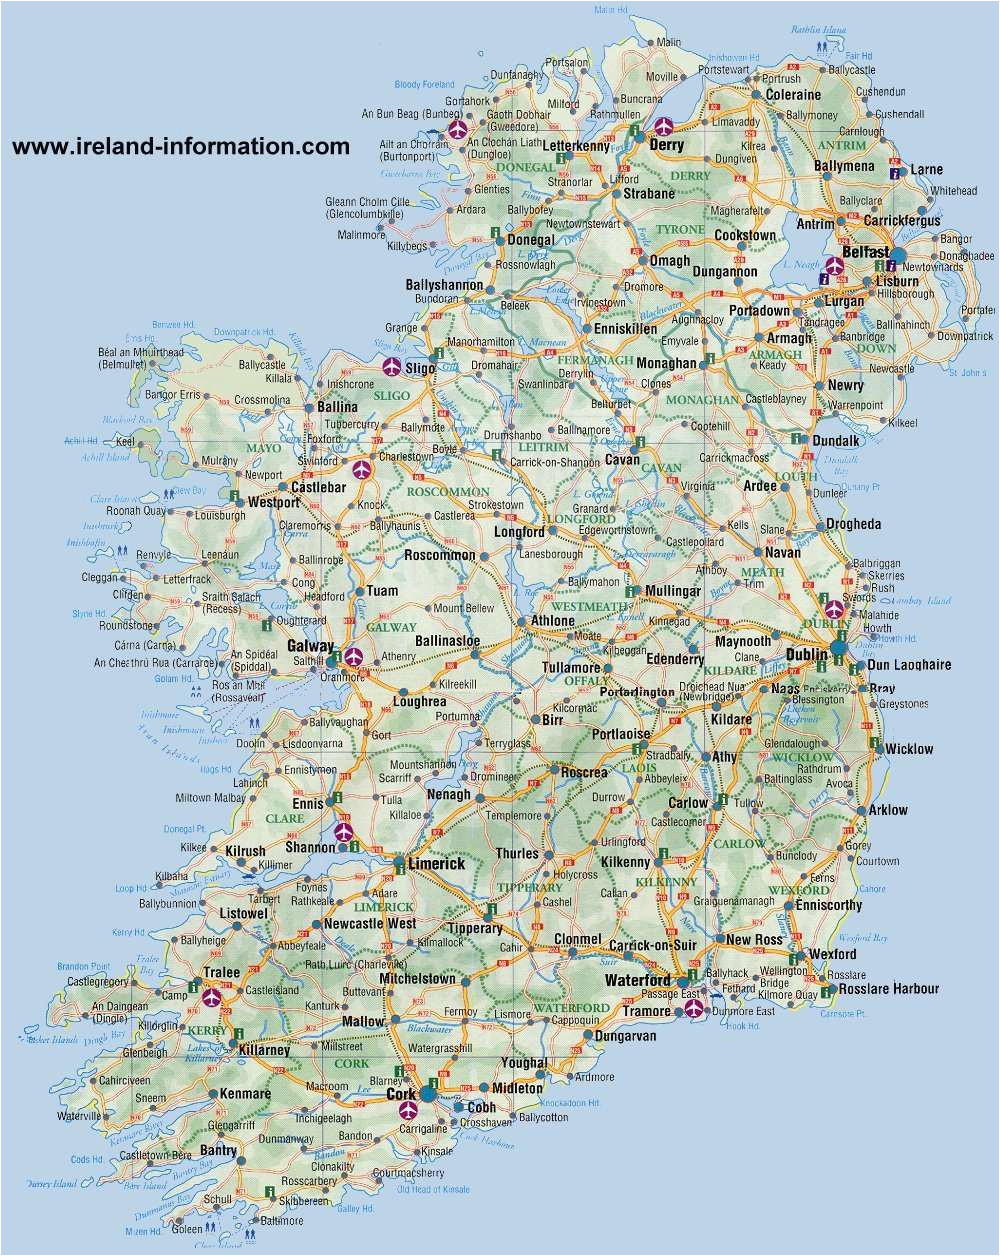 Tourist attractions Ireland Map Most Popular tourist attractions In Ireland Free Paid attractions